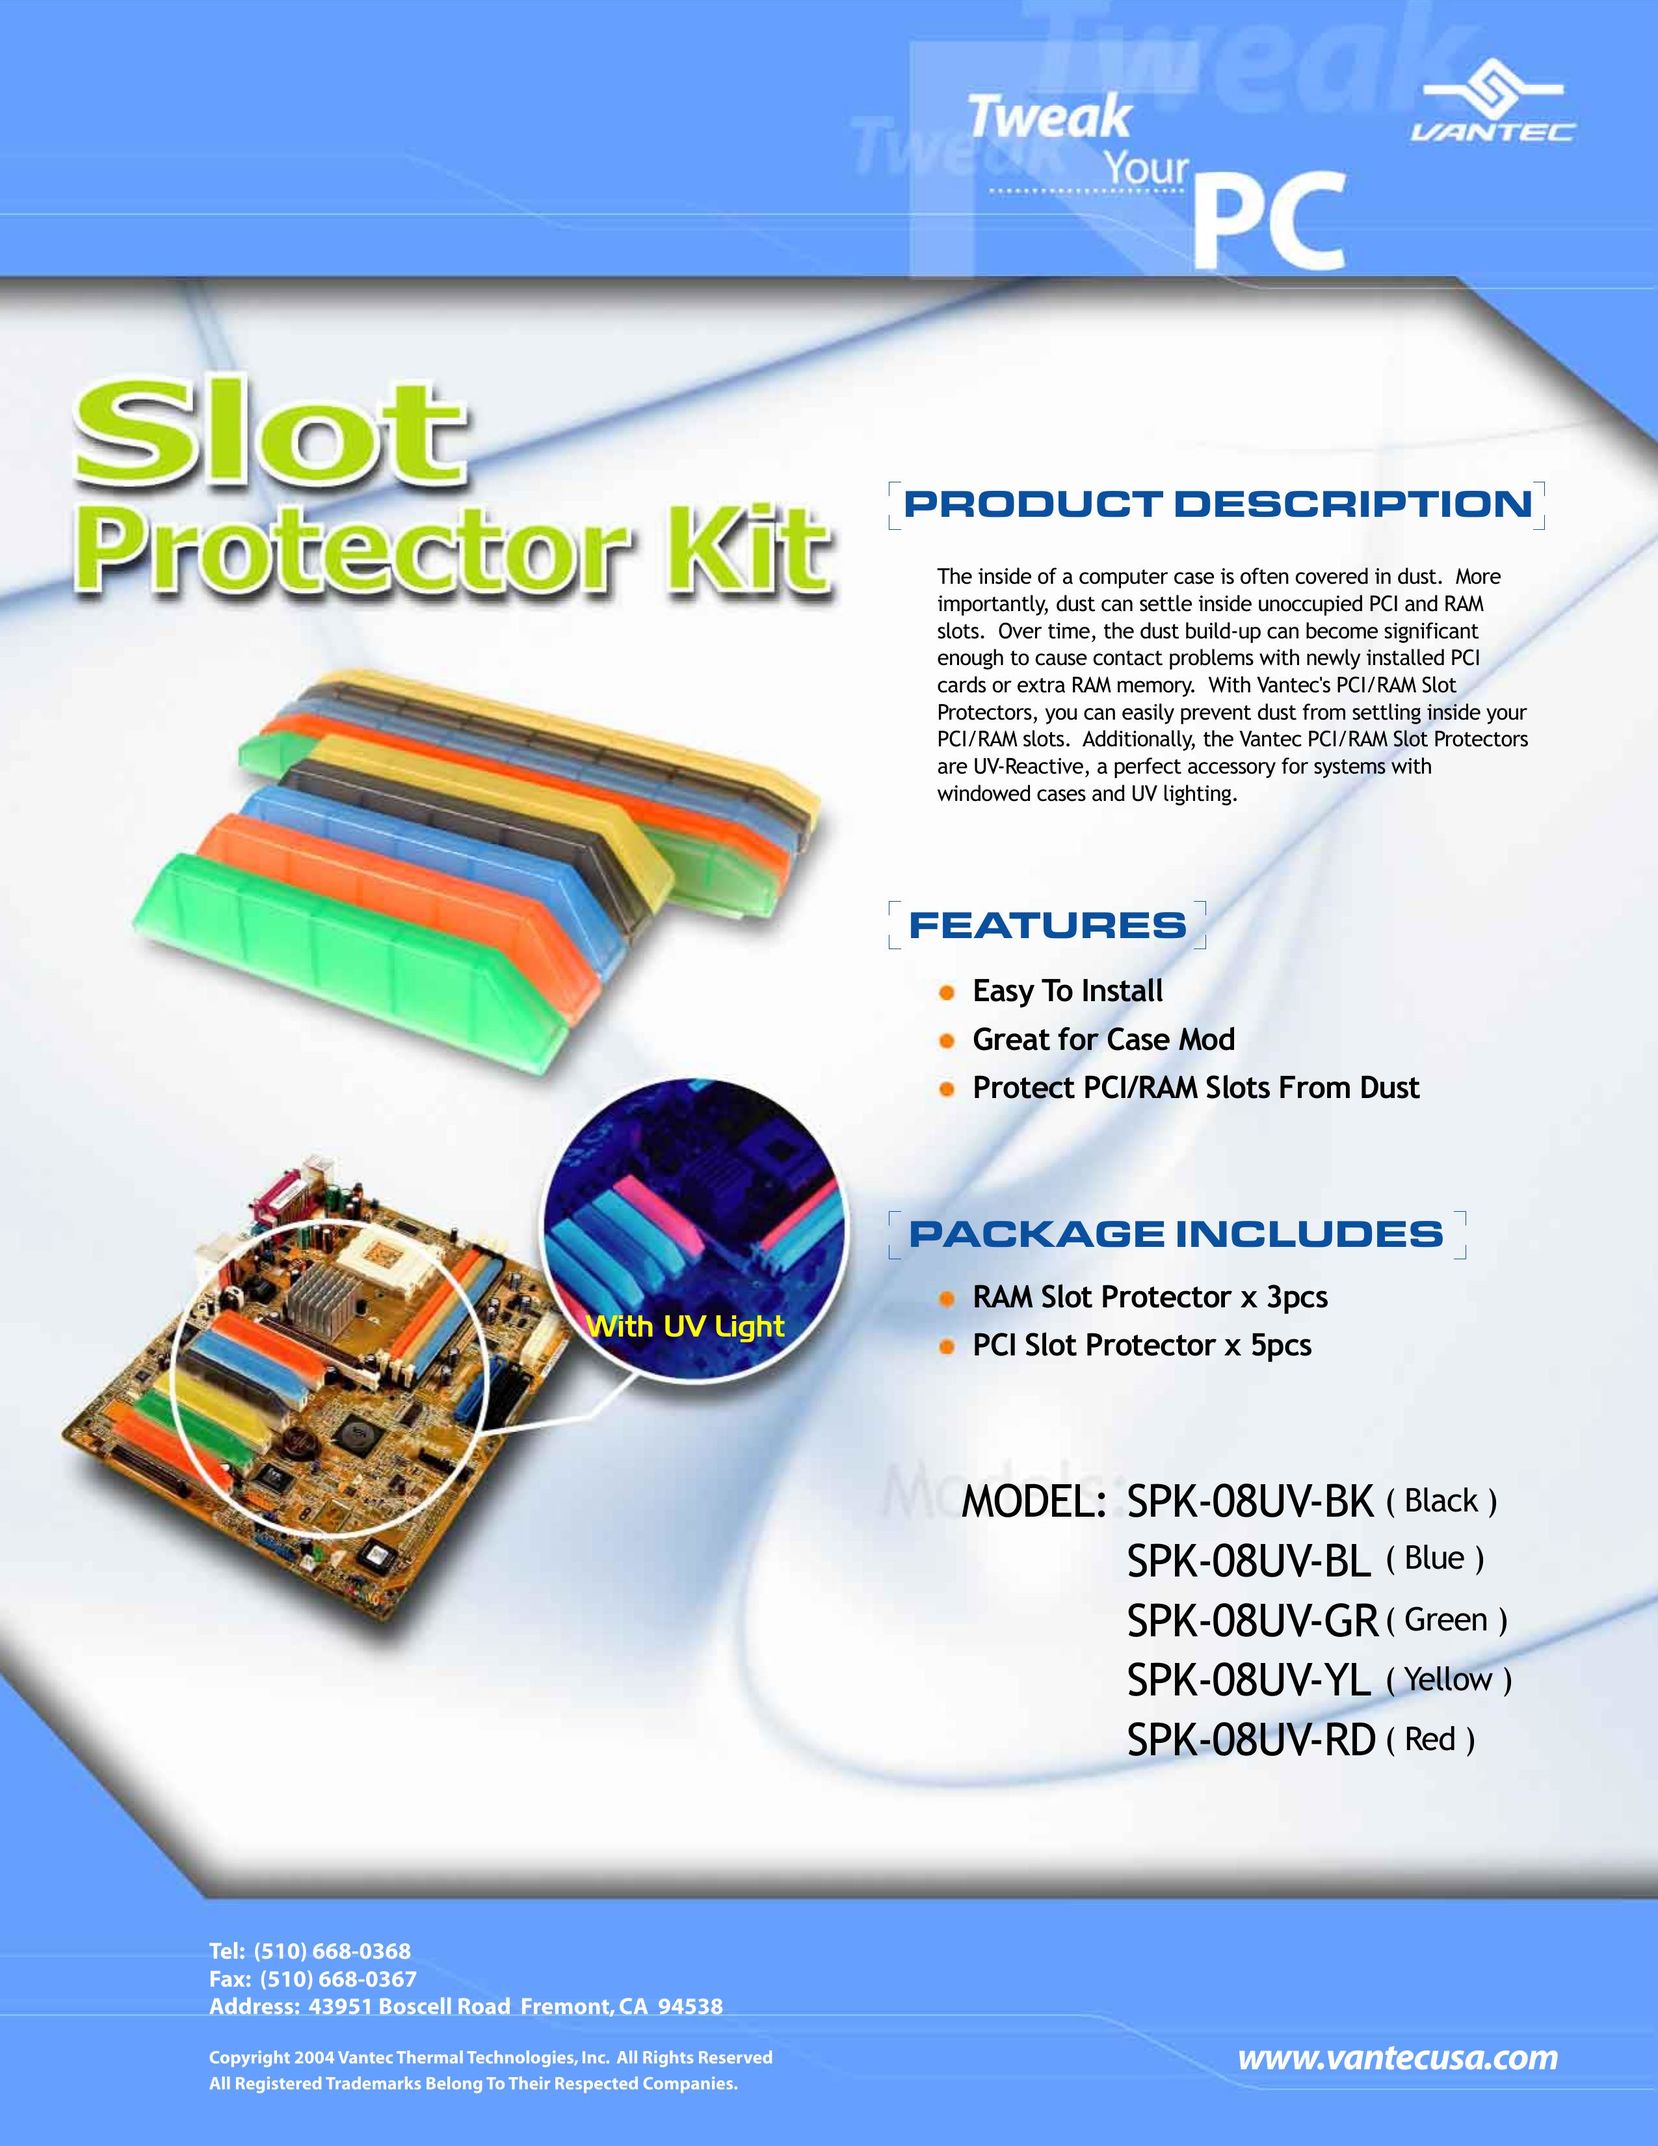 Vantec SPK-08UV-YL Surge Protector User Manual